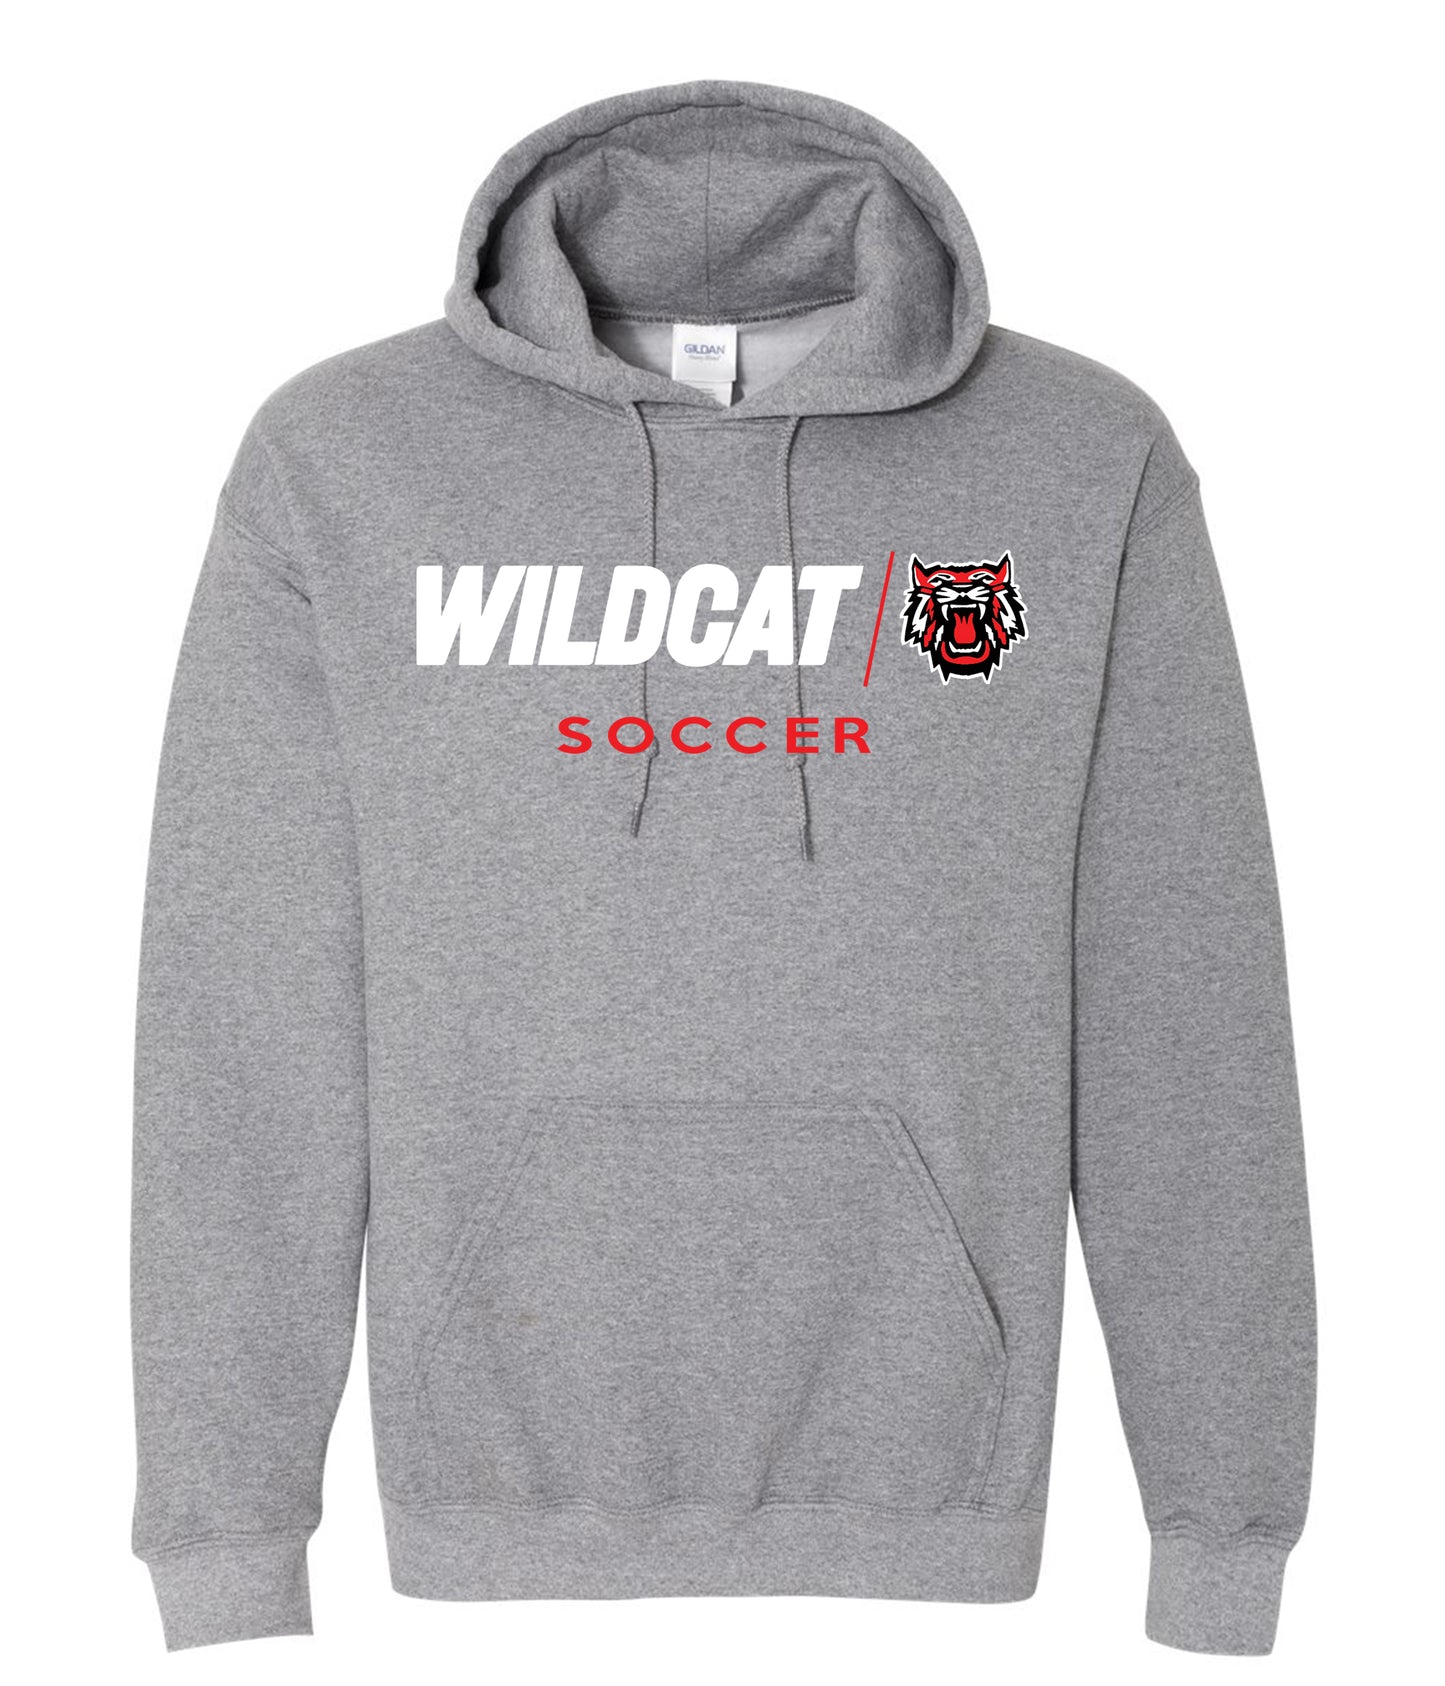 Wildcat Slasher Soccer